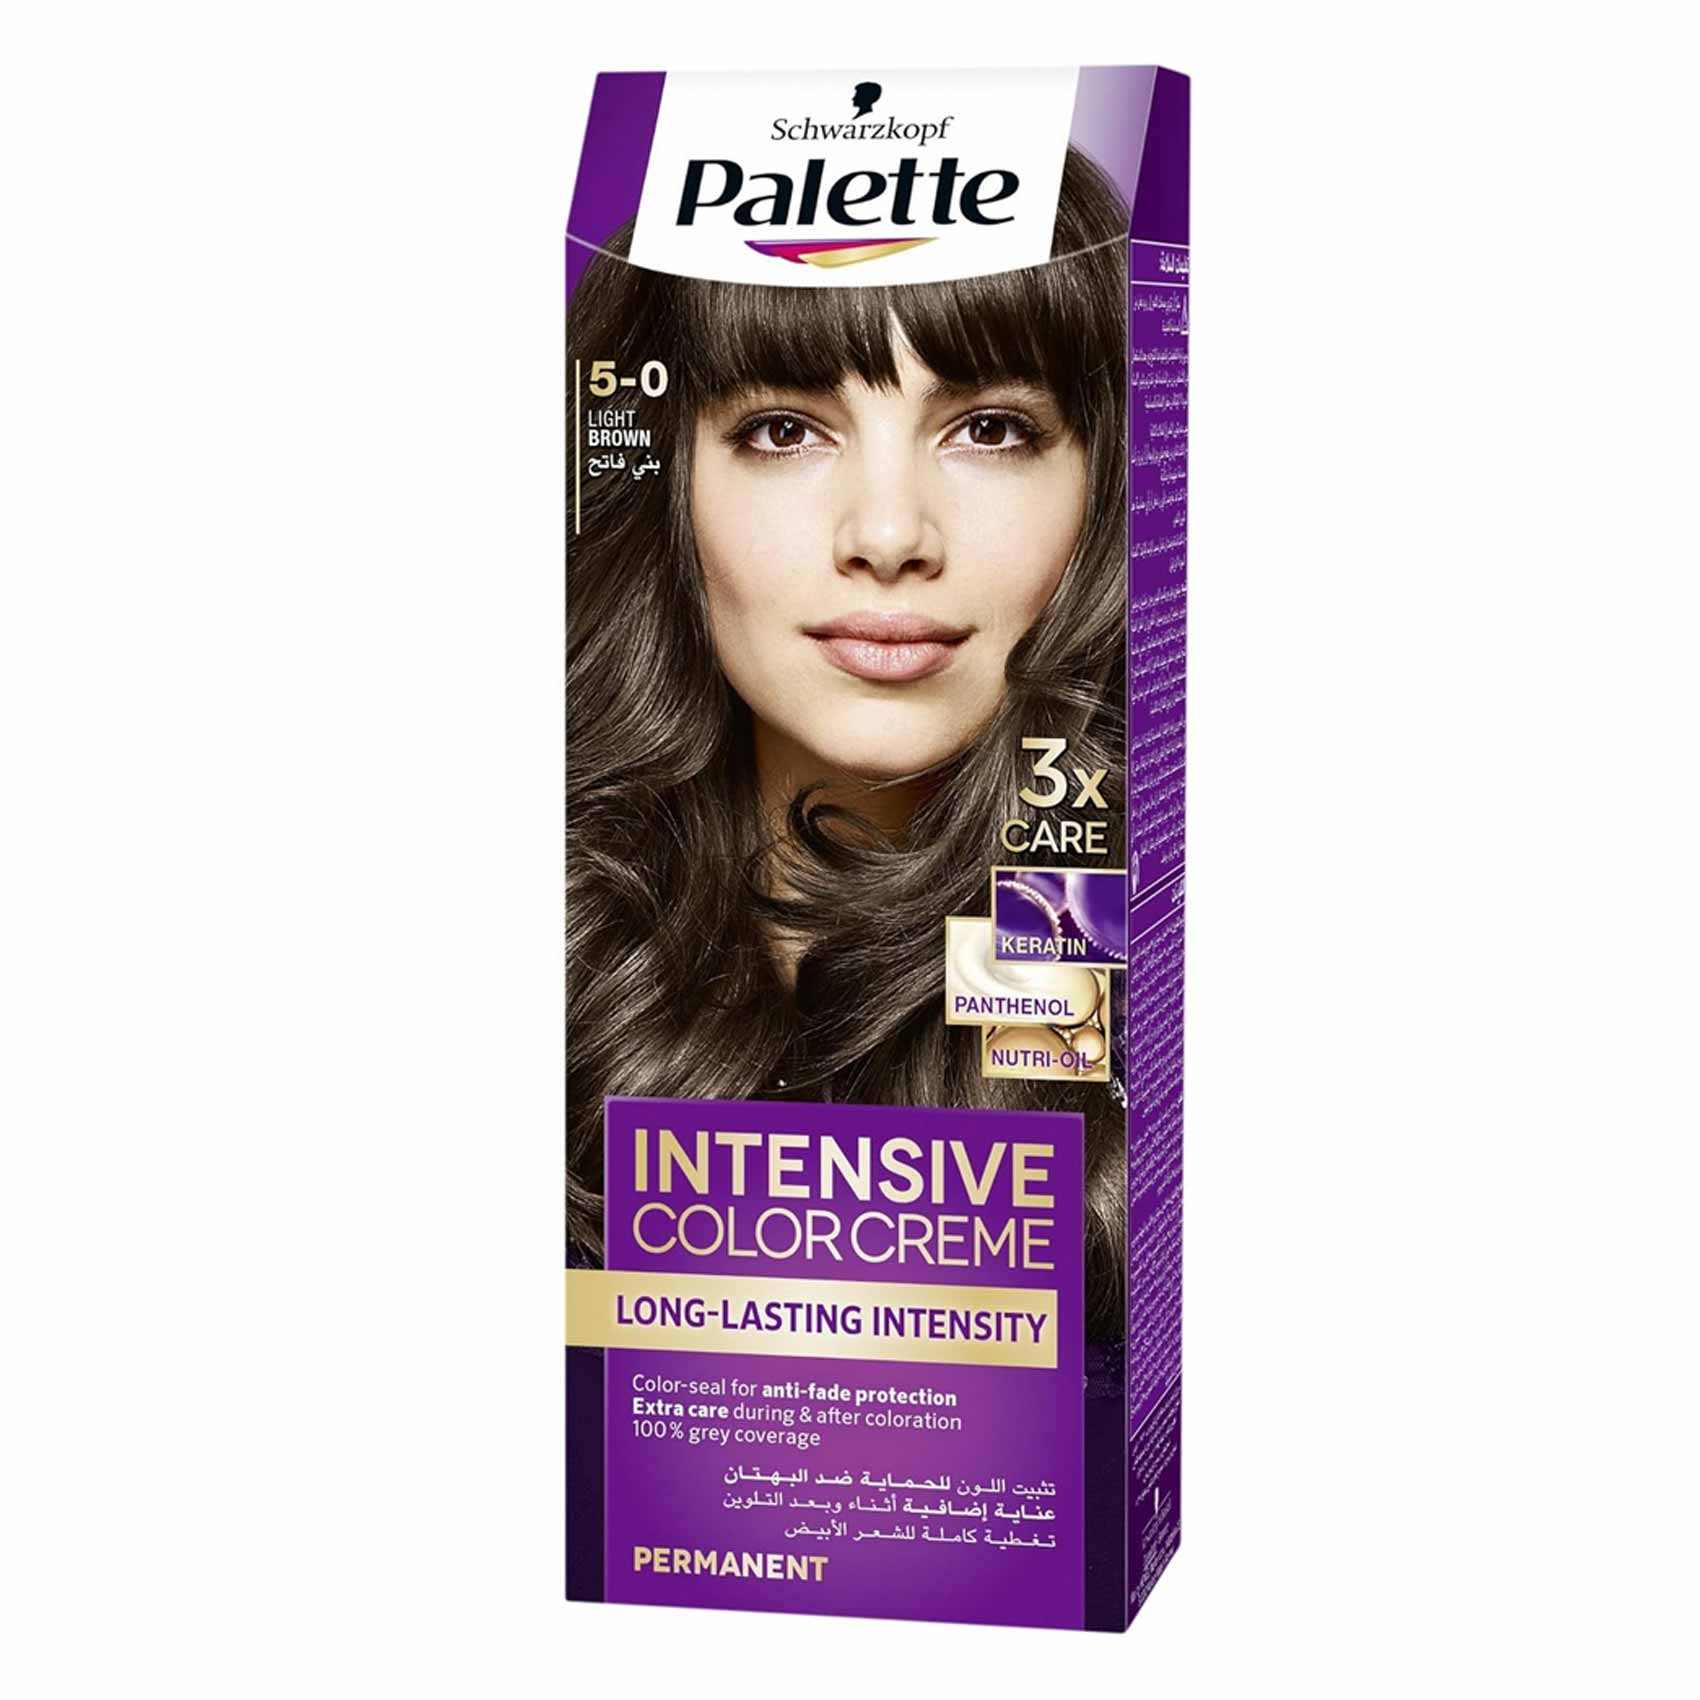 Schwarzkopf Palette Permanent Intensive Hair Color Cream 5-0 Light Brown 50ml